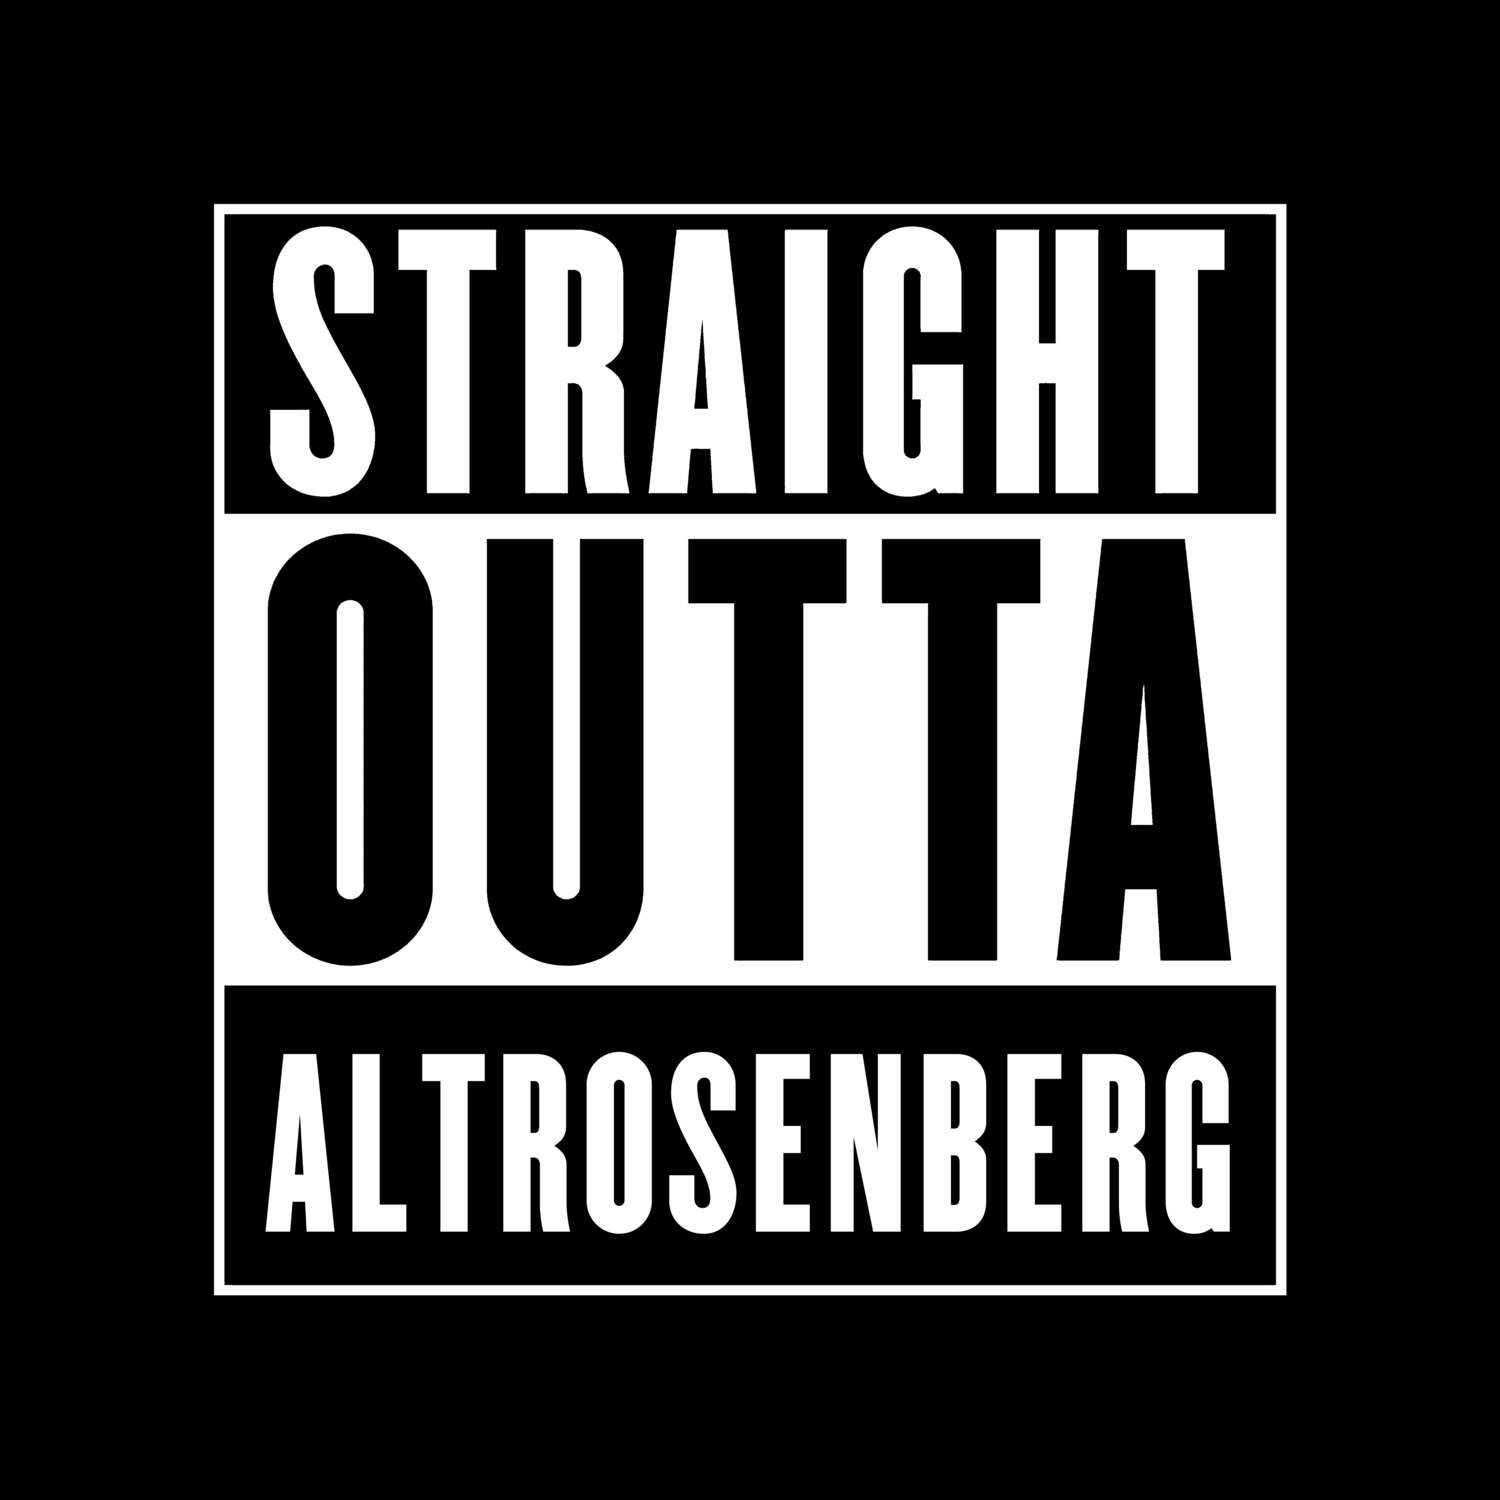 Altrosenberg T-Shirt »Straight Outta«